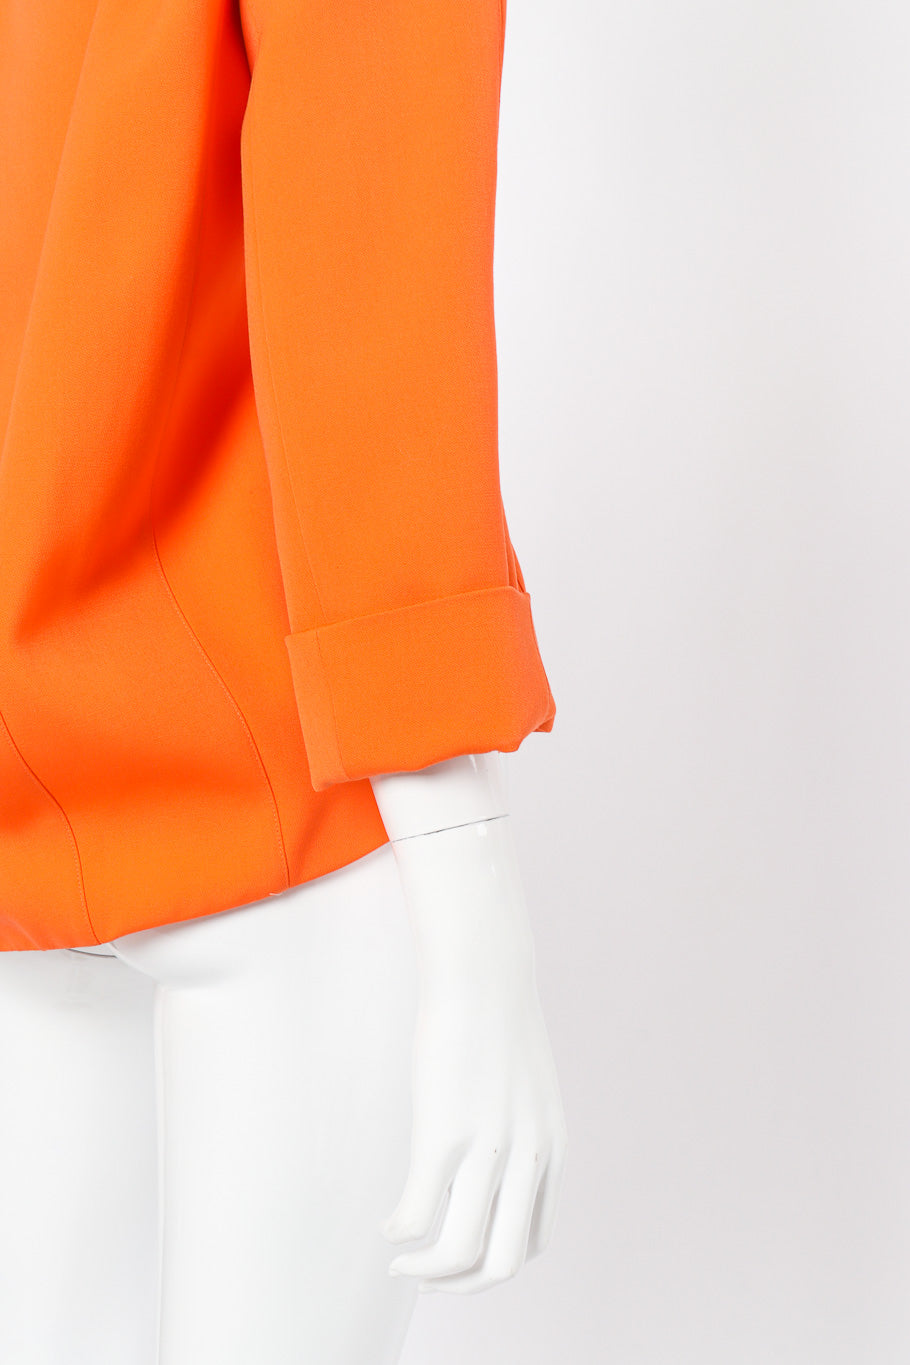 Thierry Mugler Off Shoulder Bubble Jacket sleeve closeup on mannequin @Recessla